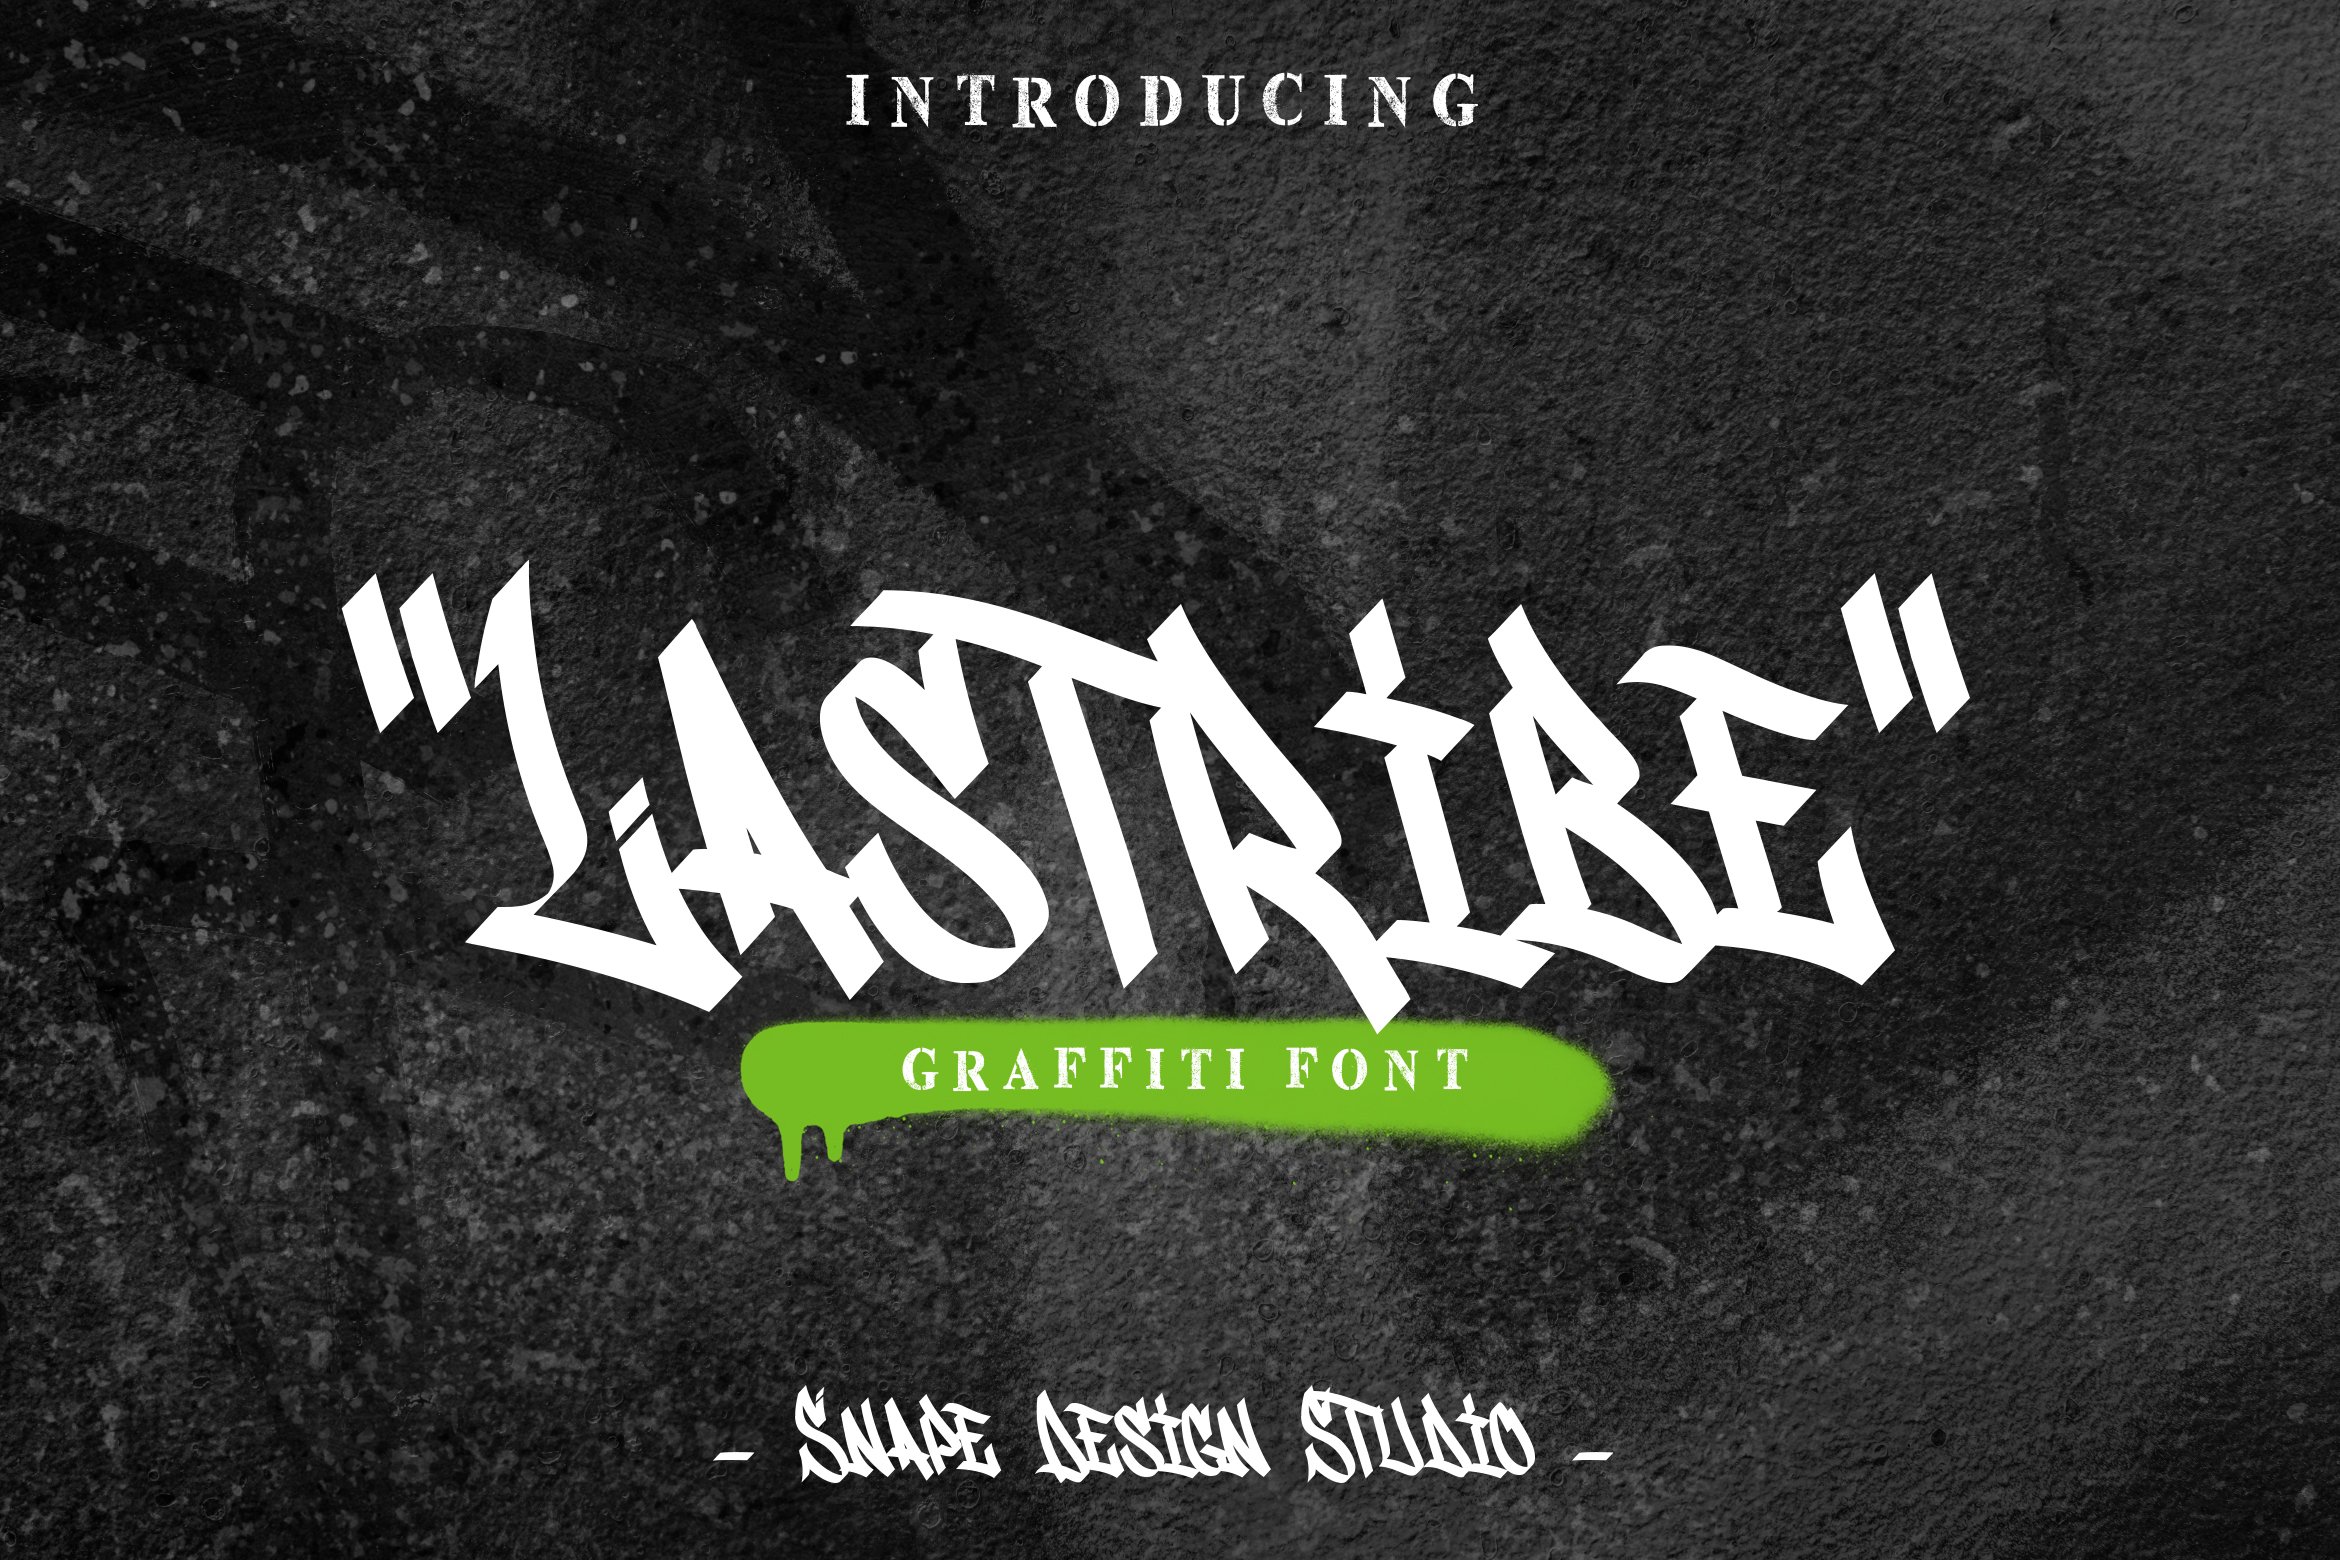 Lastribe - Graffiti Font cover image.